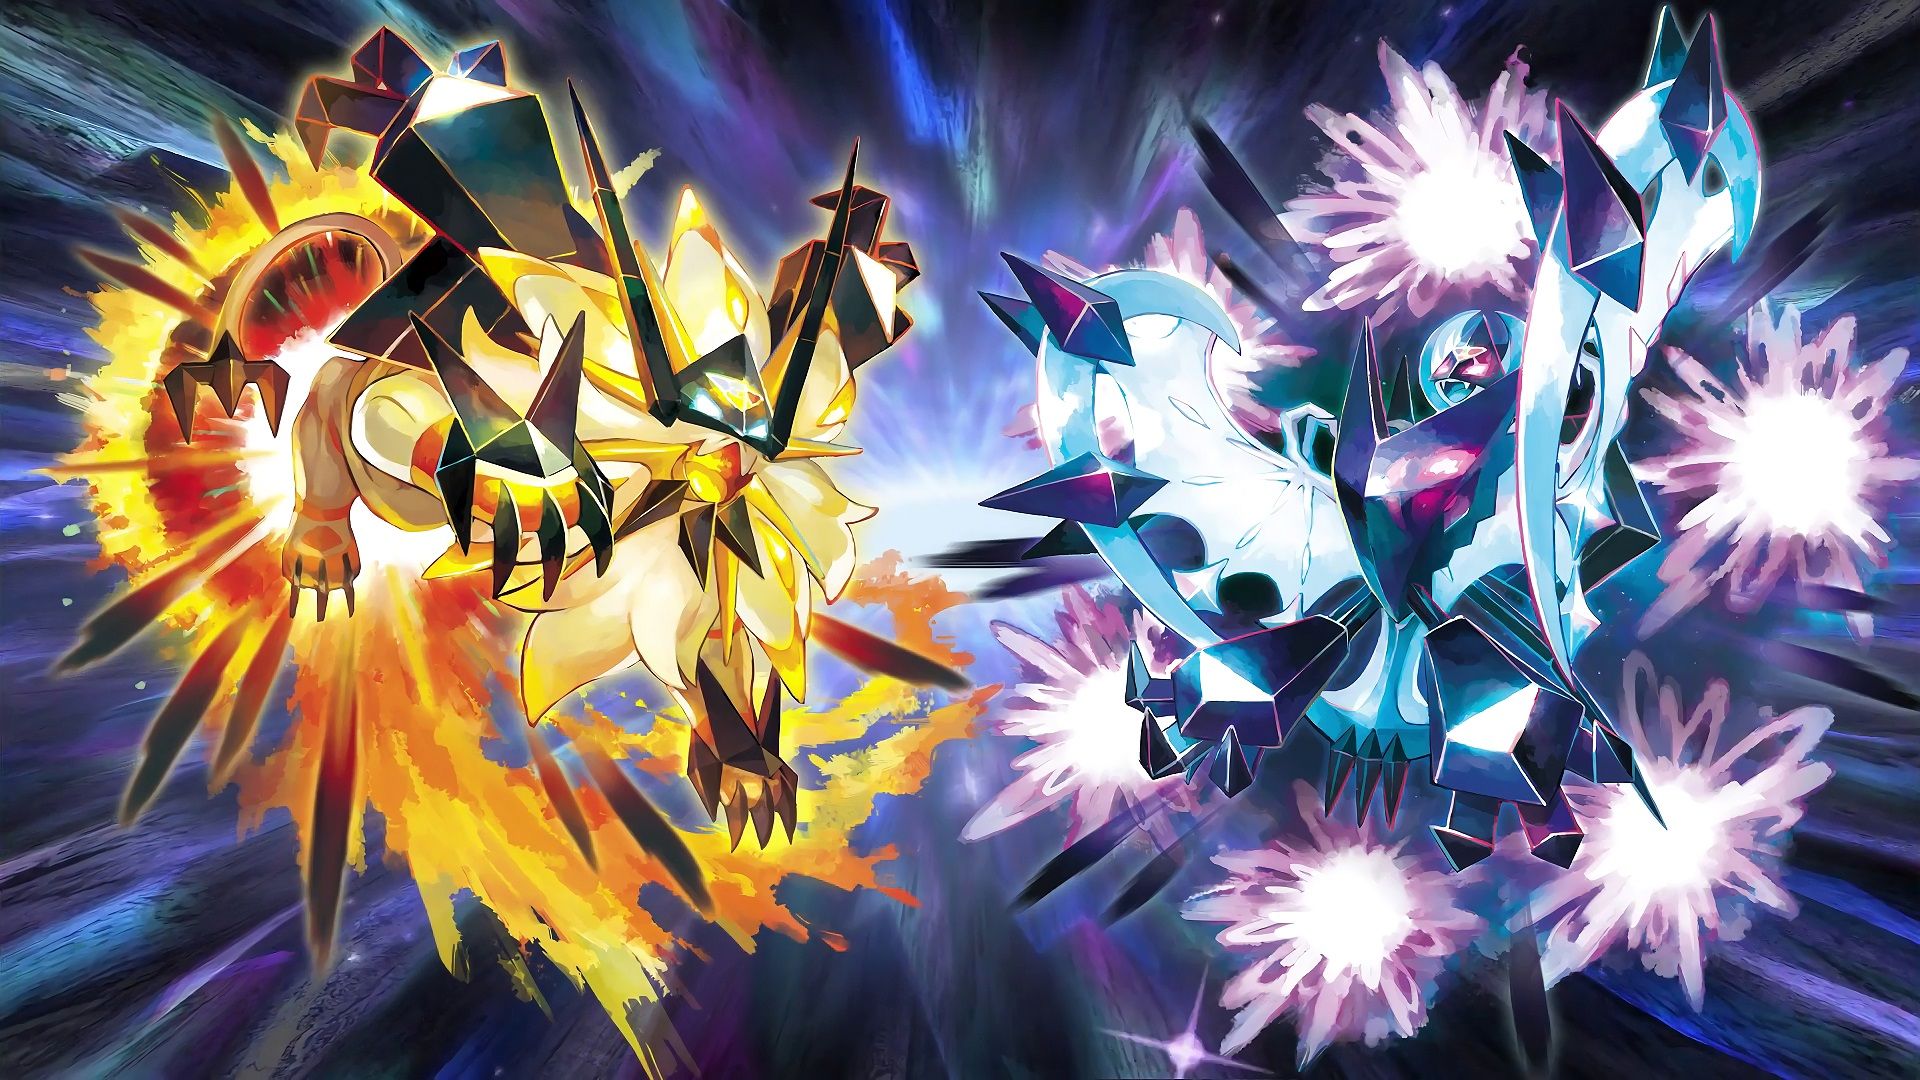 Pokémon Sol y Luna HD Wallpapers e imágenes de fondo - stmed.net